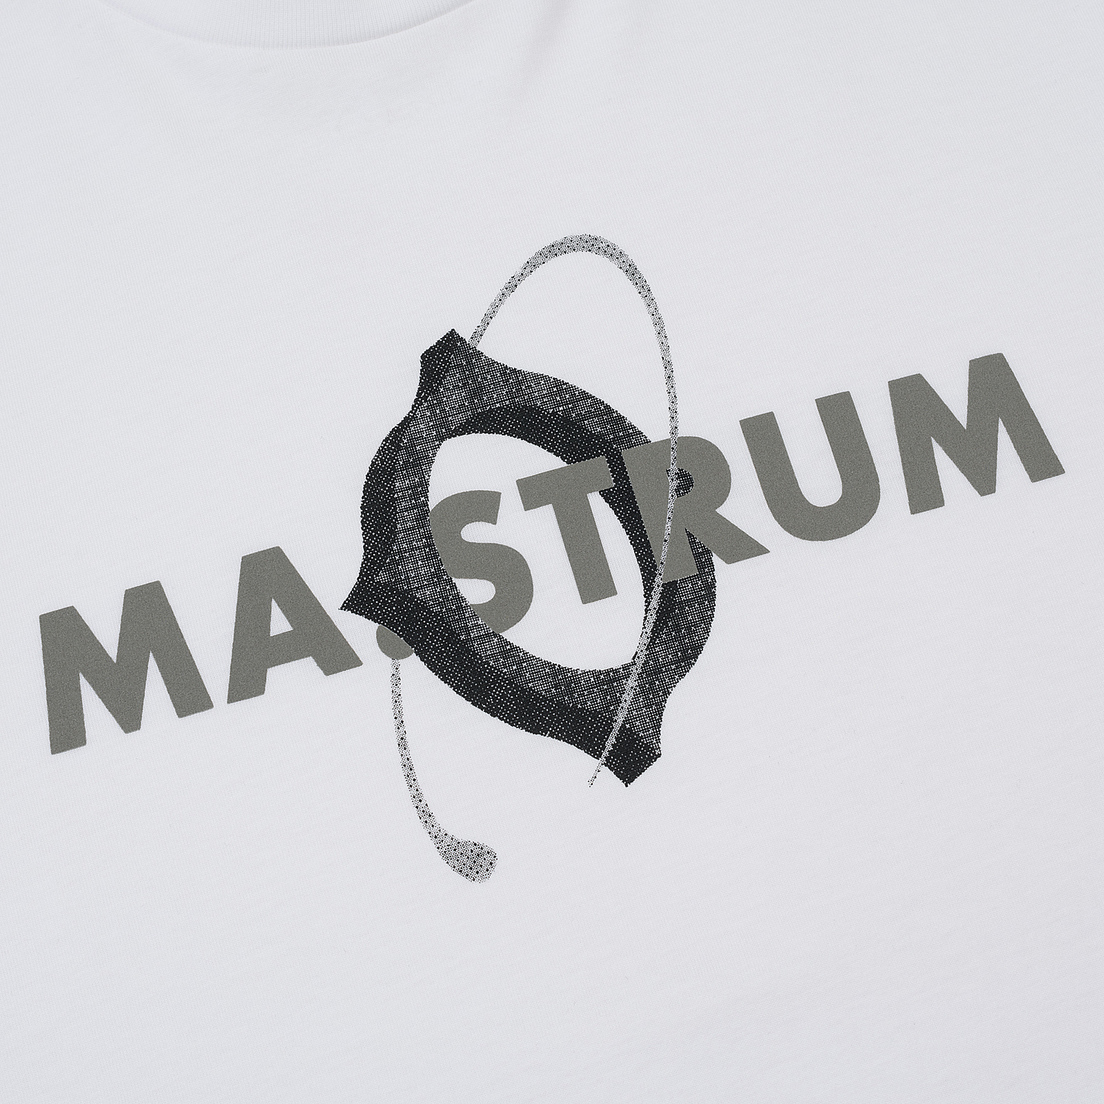 MA.Strum Мужская футболка Masa Icon